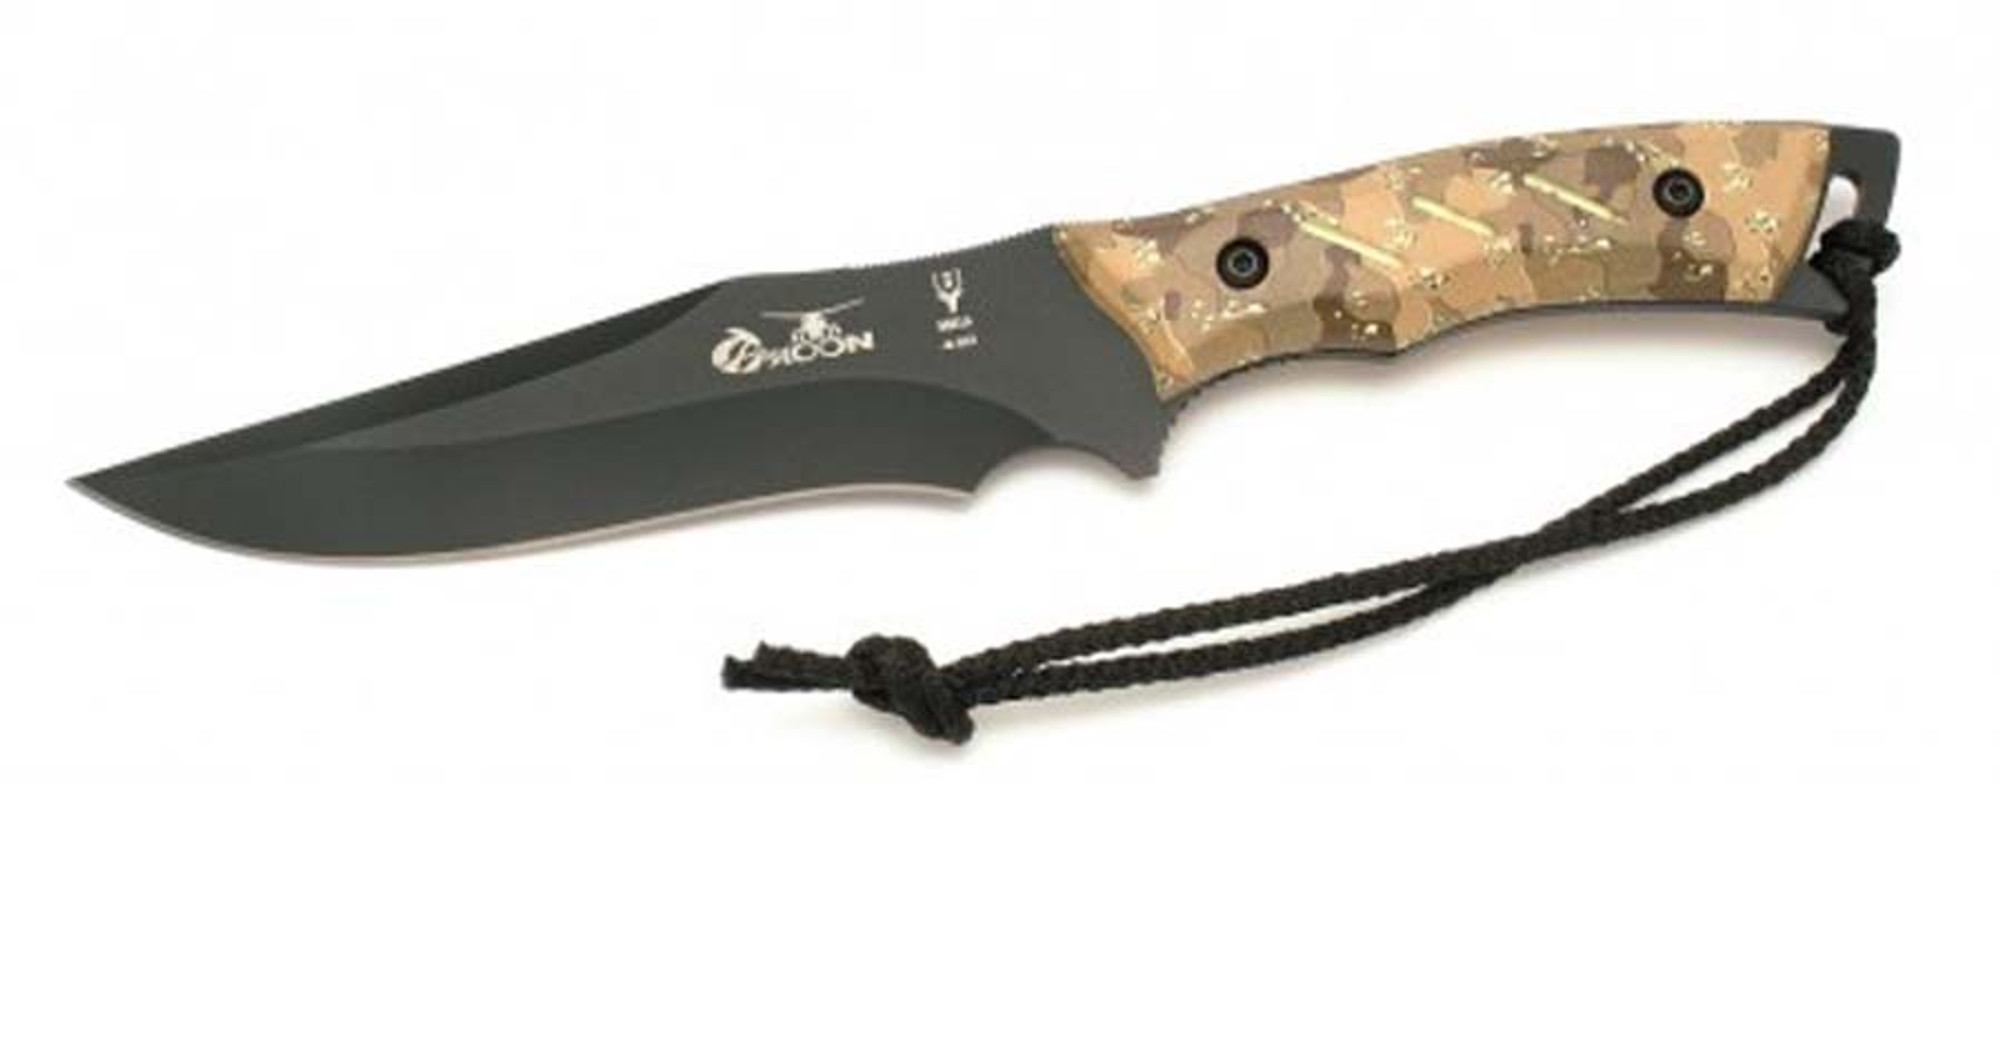 MUELA TYPHOON-DES.N, X50CrMoV15, 6" Fixed Blade Hunting Knife, Desert Camo & Digital Soft Touch Grips